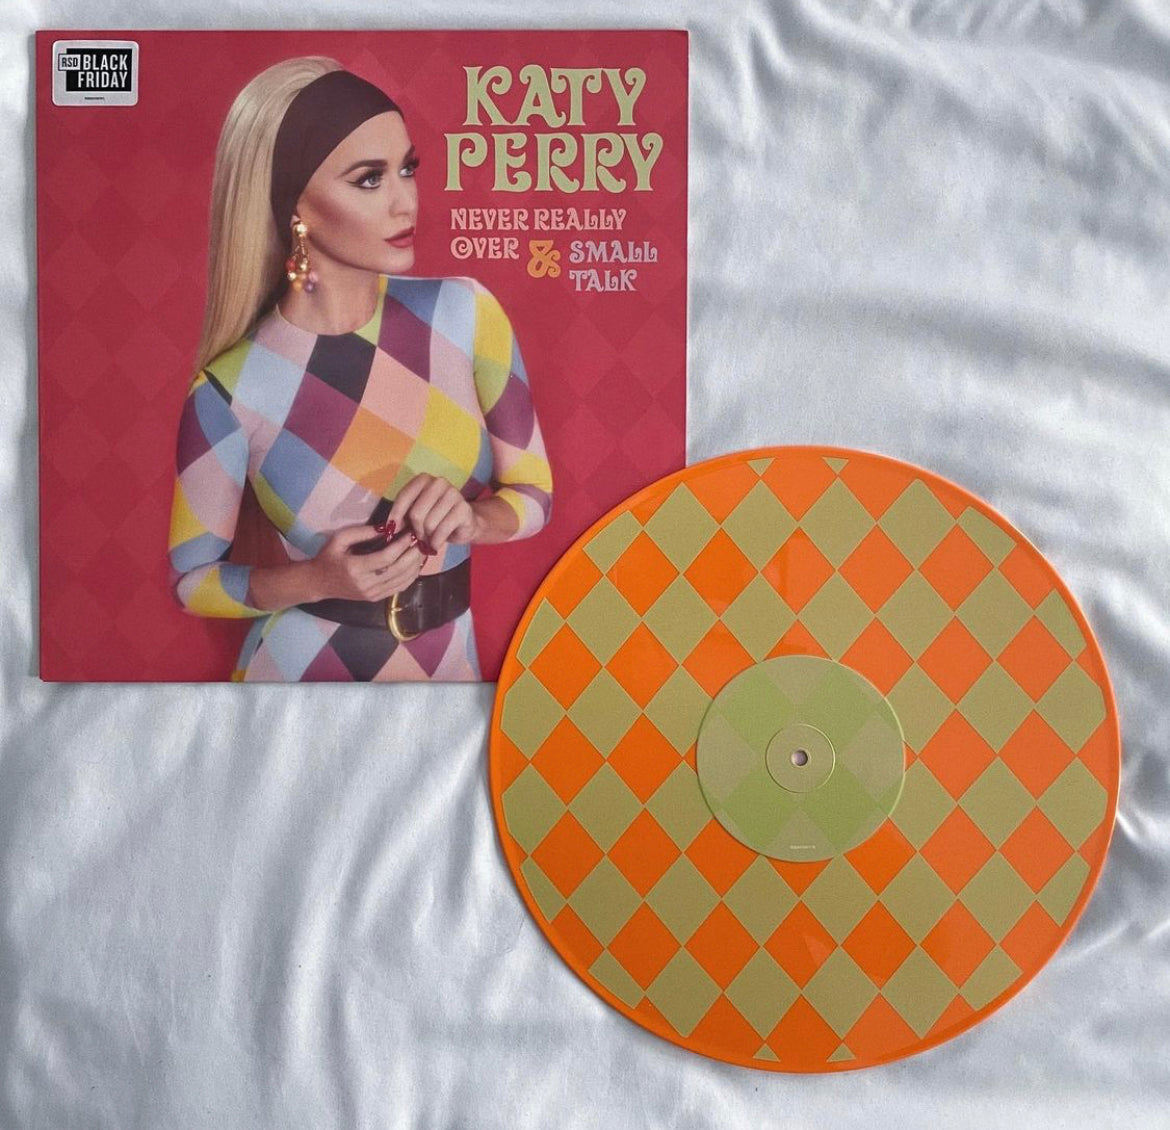 Katy Perry - Never Really Over / Small Talk RSD 2019 Vinilo